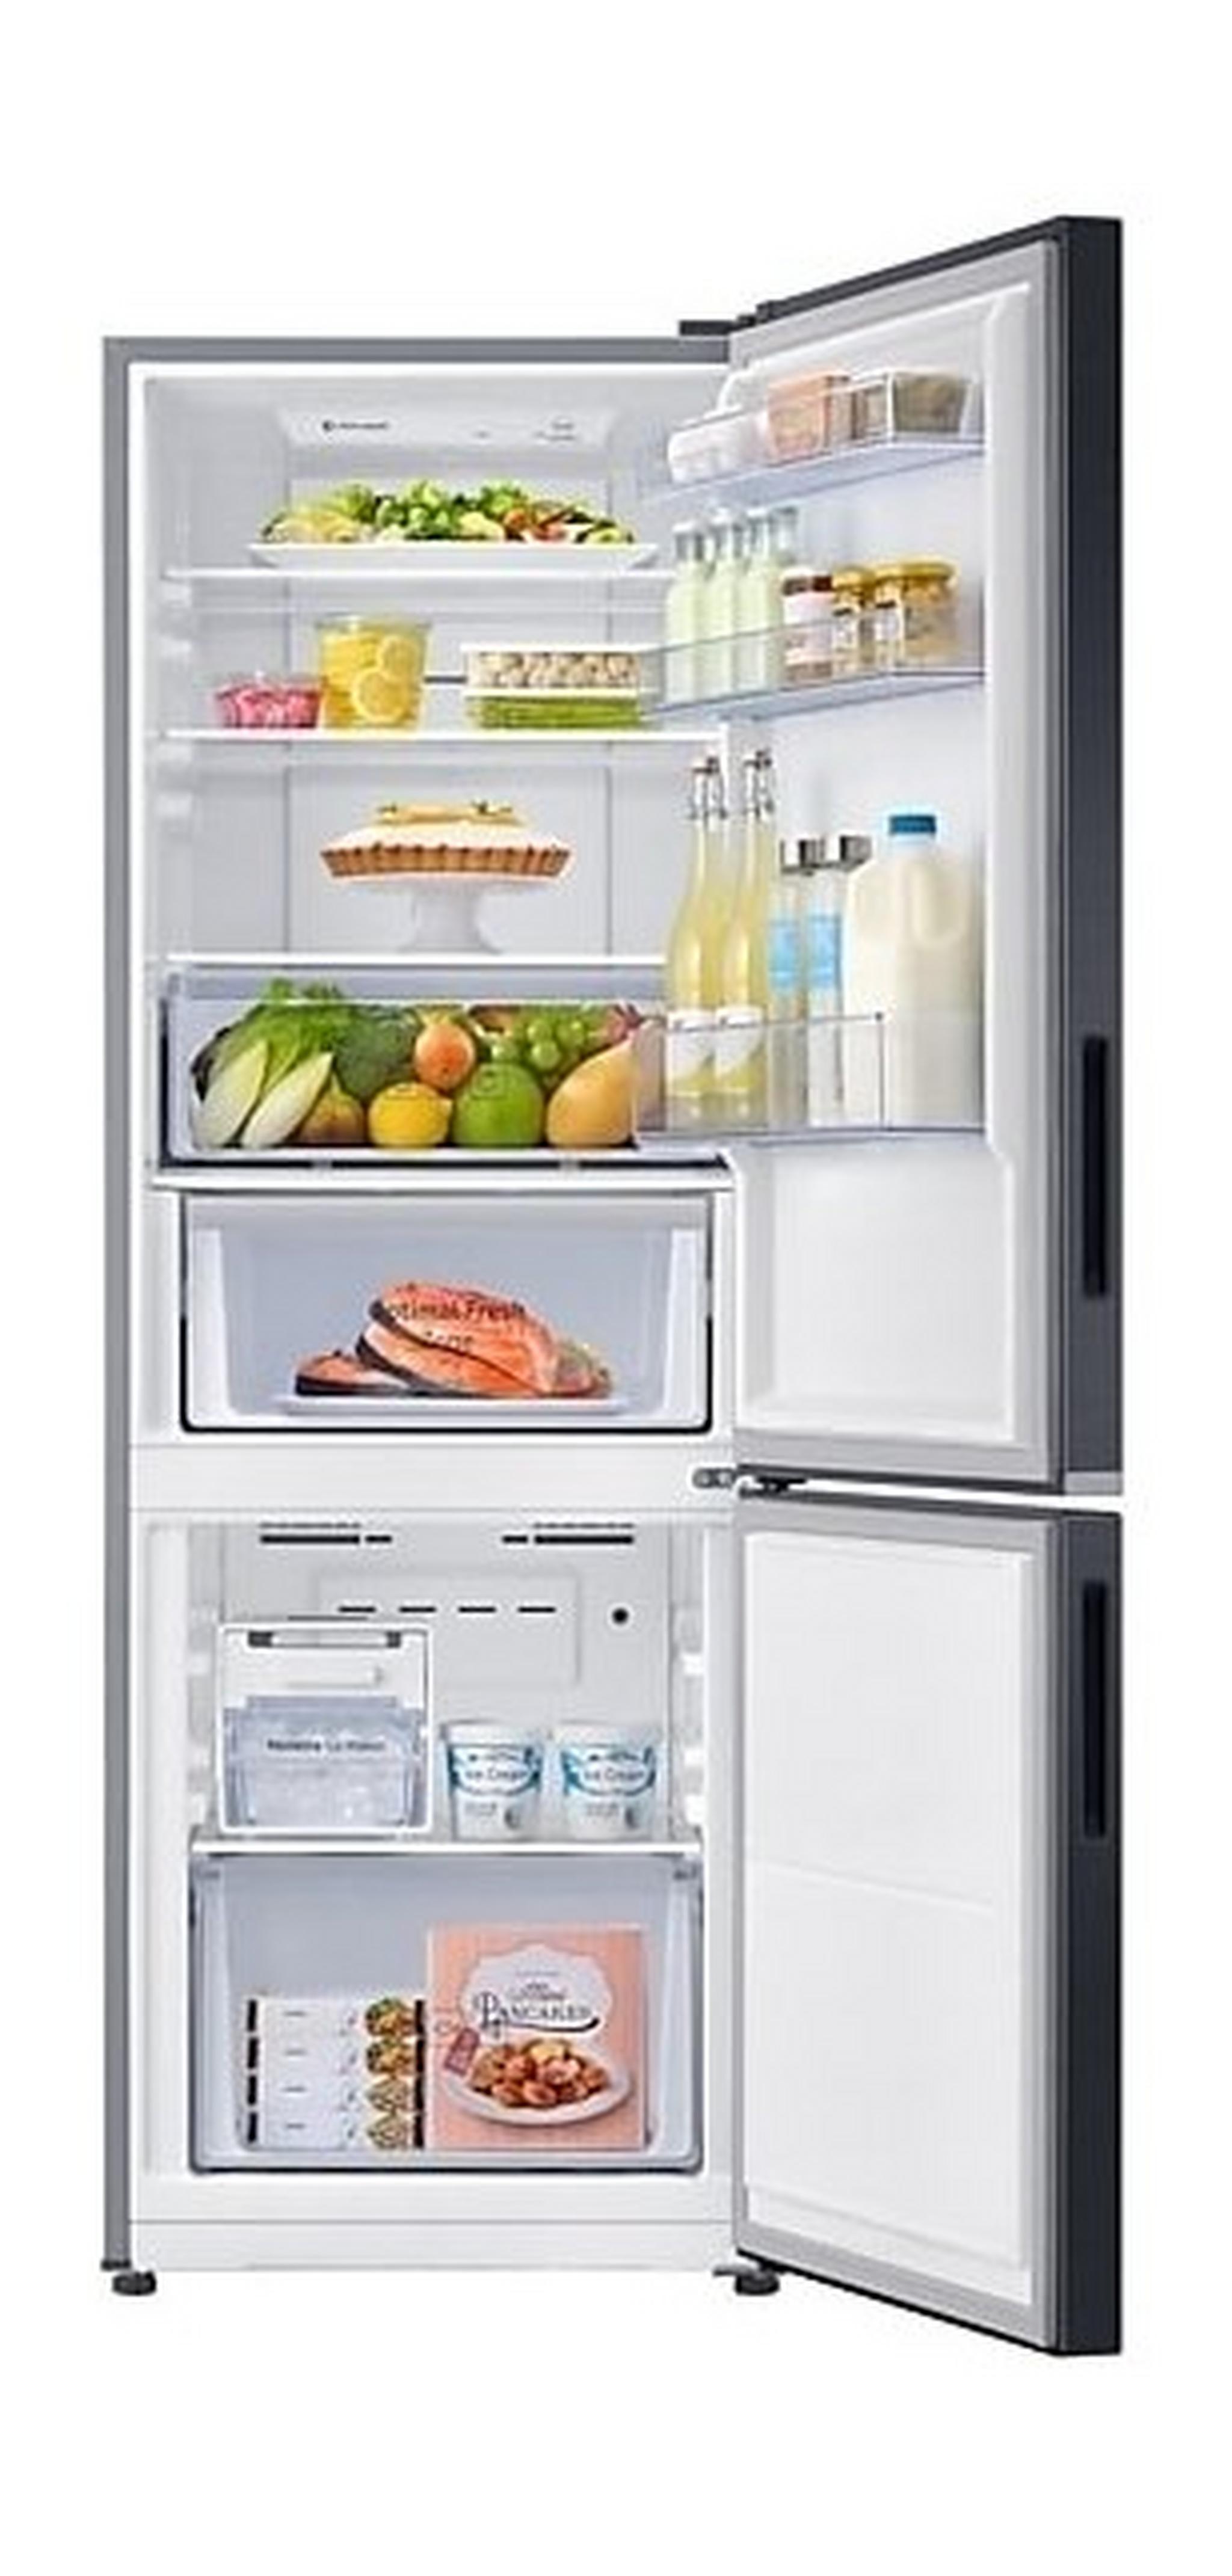 Samsung 11 CFT Bottom Mount Refrigerator - (RB30N4050B1)